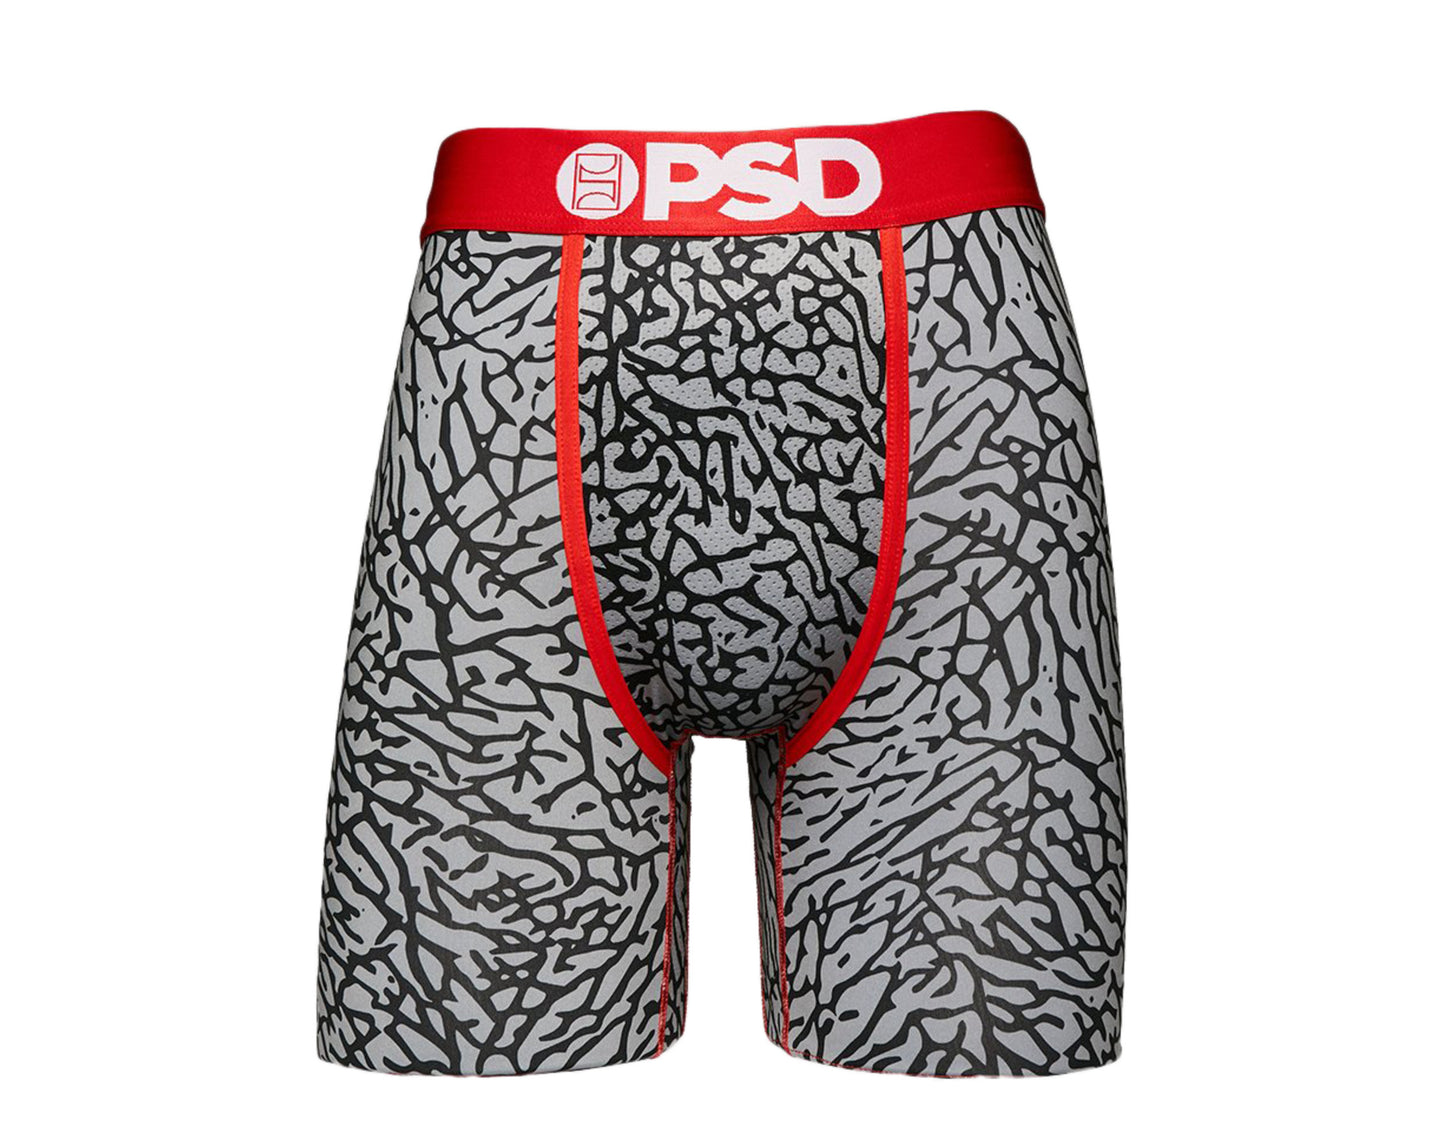 PSD Elephant Boxer Briefs Men's Underwear